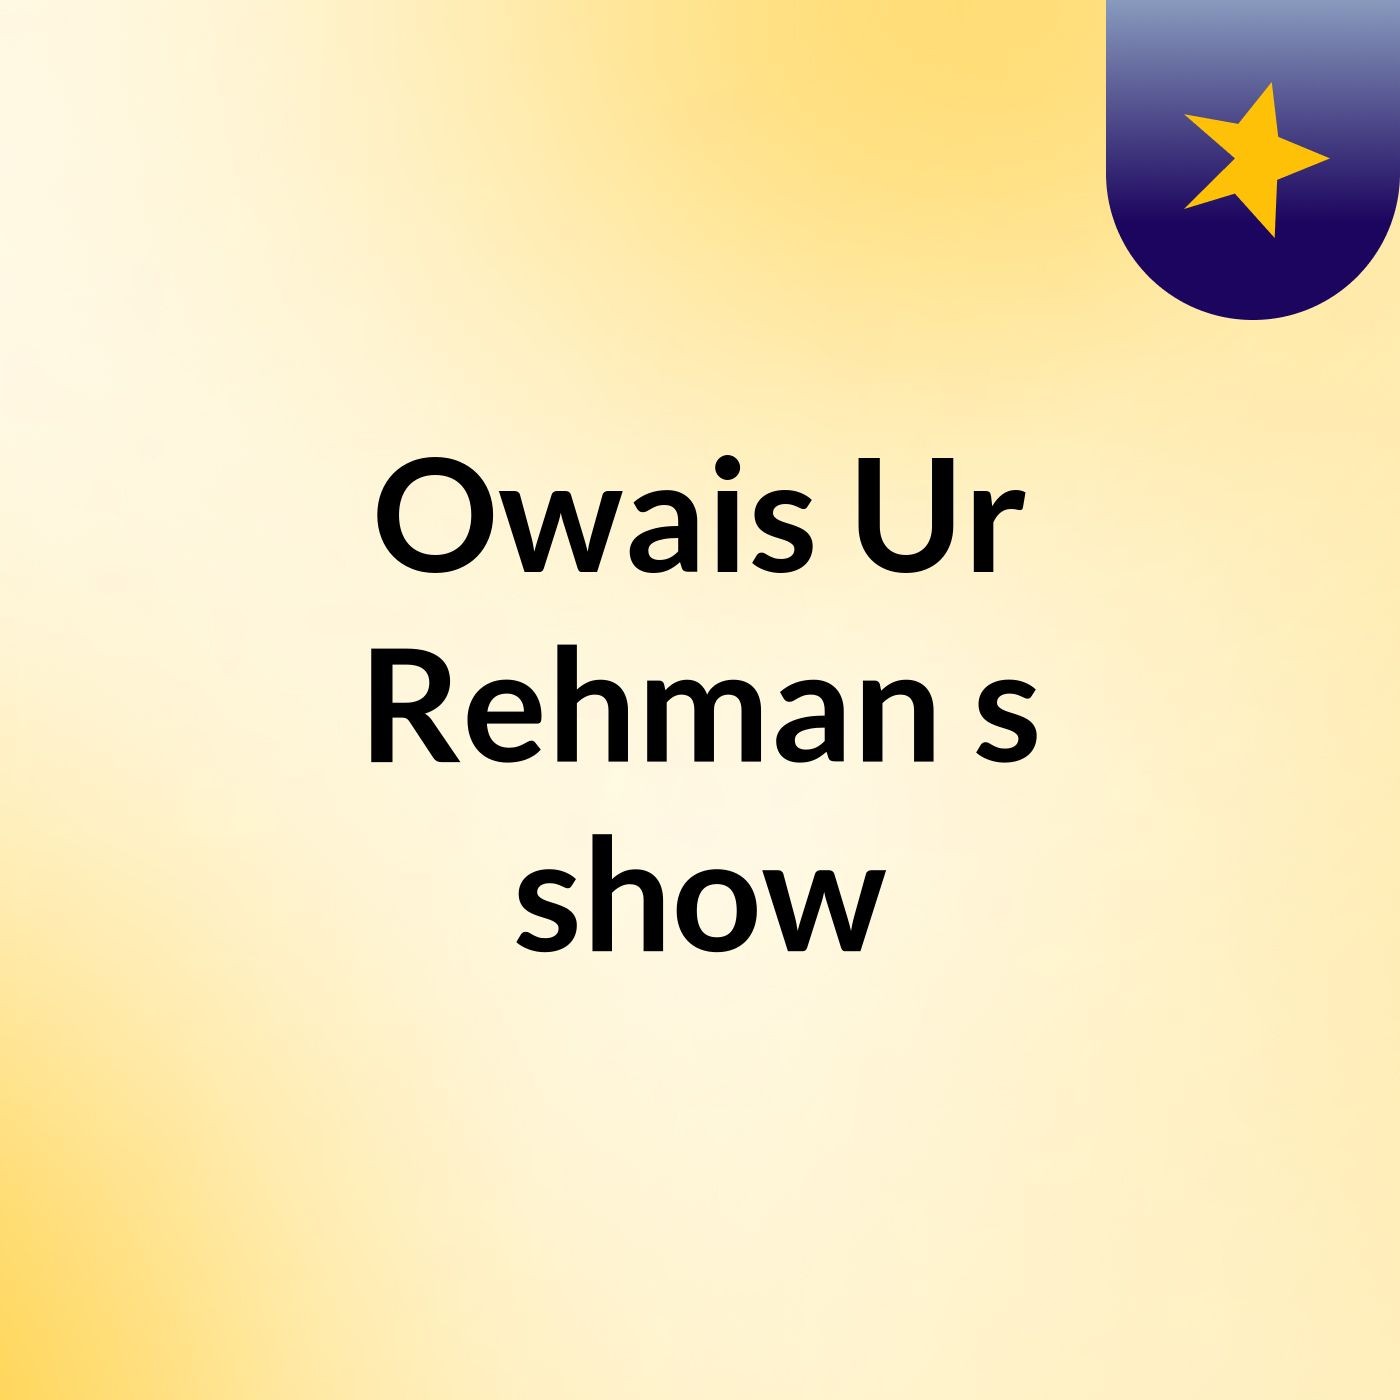 Owais Ur Rehman's show